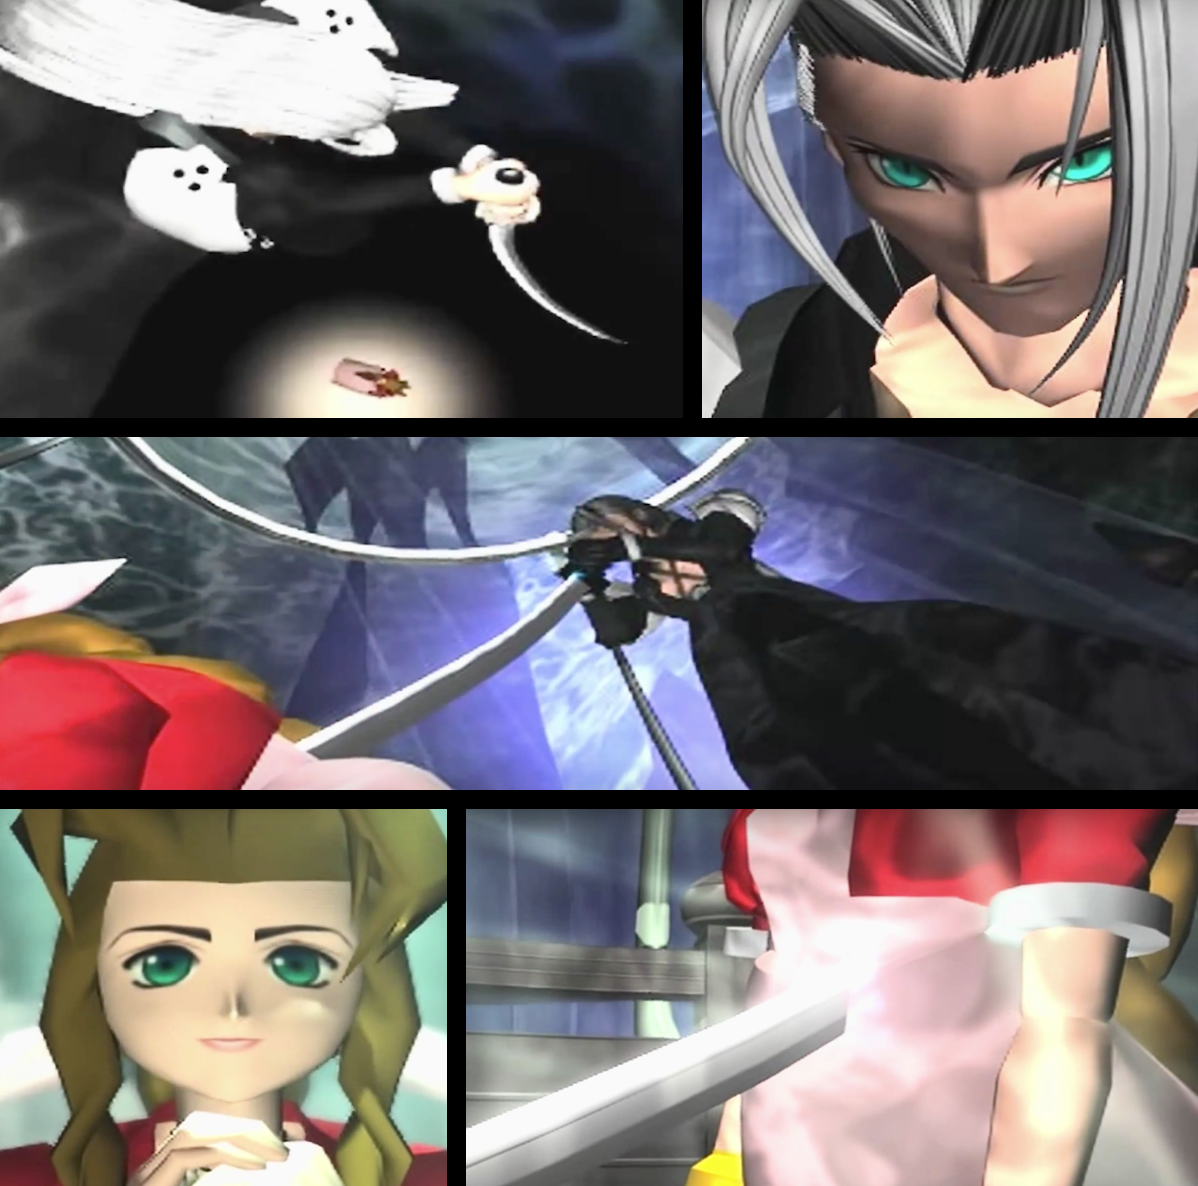 Sephiroth murders Aeris in Final Fantasy 7